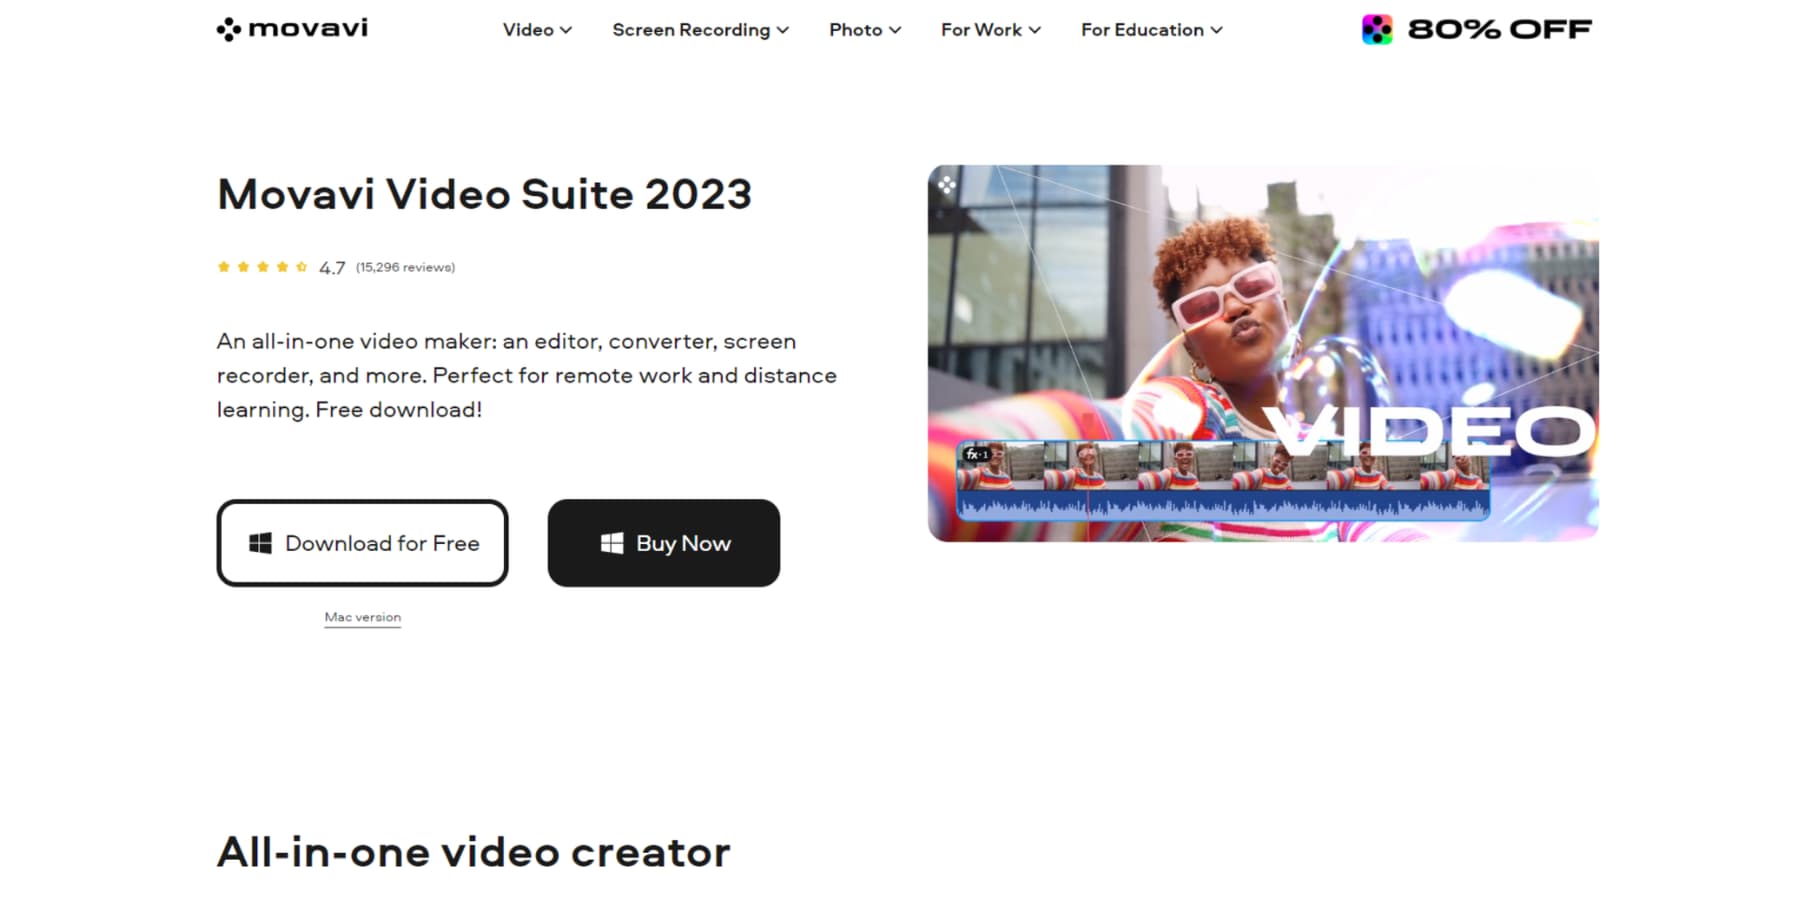 Movavi Video Suite's Homepage